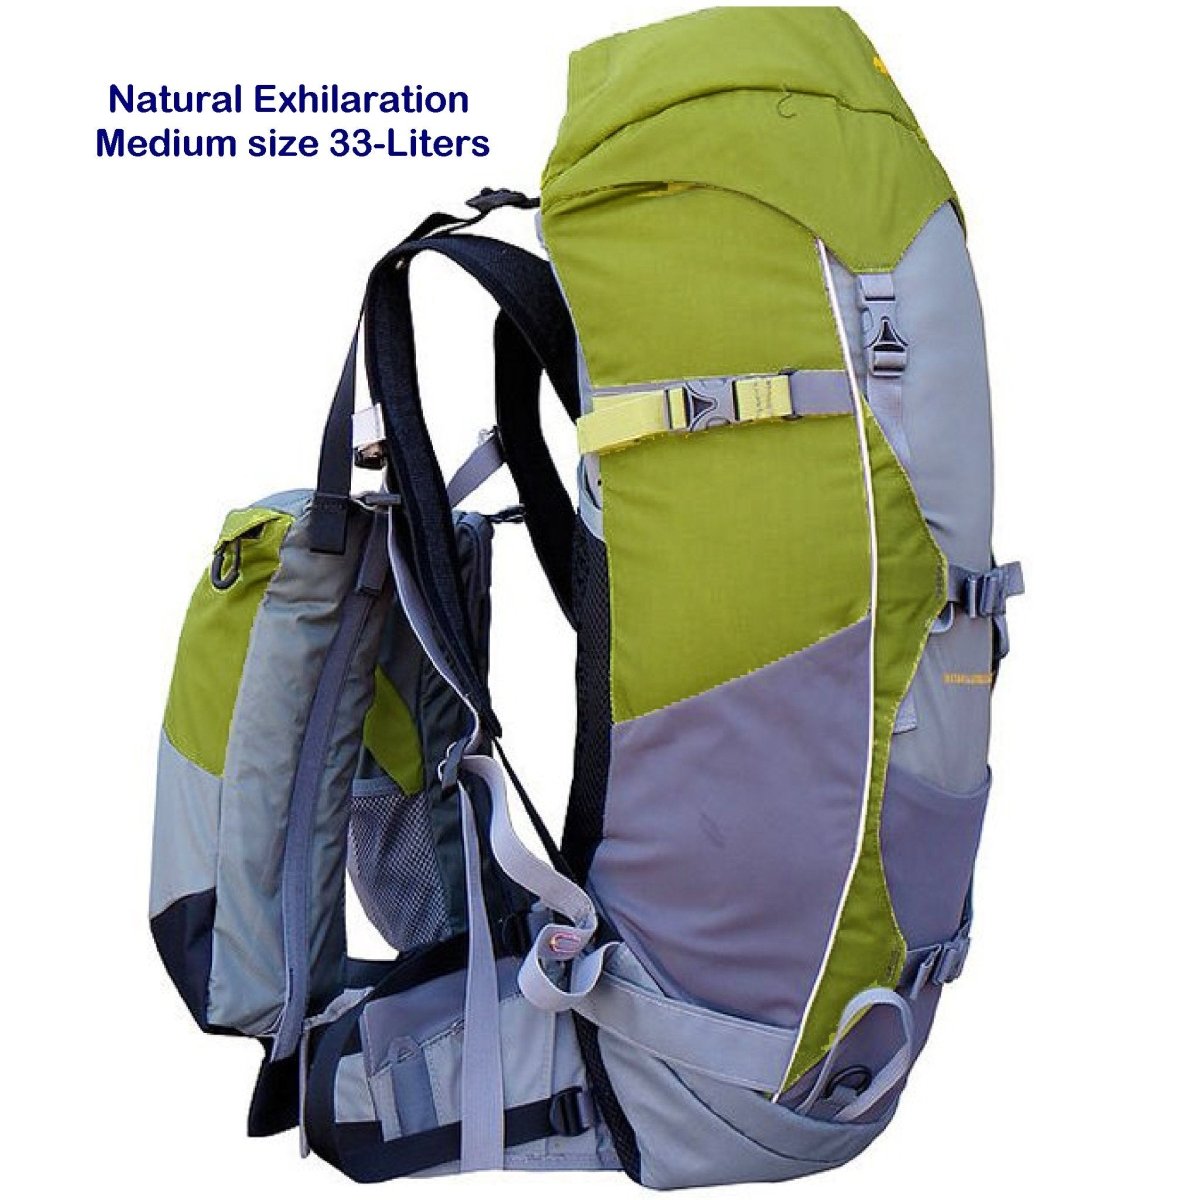 Buy ASPIRATION INTERNATIONAL Shiny Sling Bag (Grey) at Amazon.in